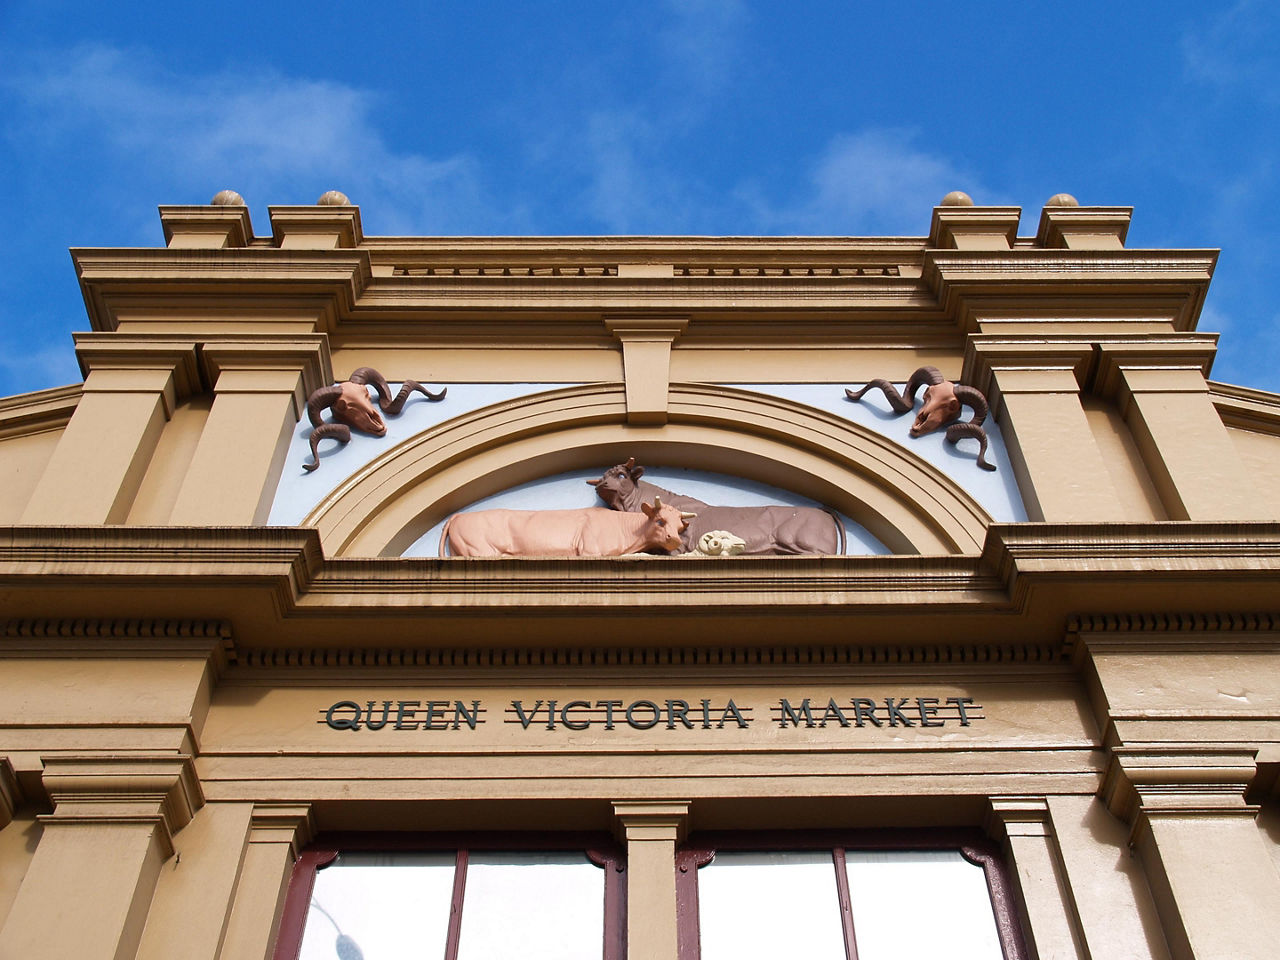 Shopping in the Queen Victoria Market in Melbourne, Australia